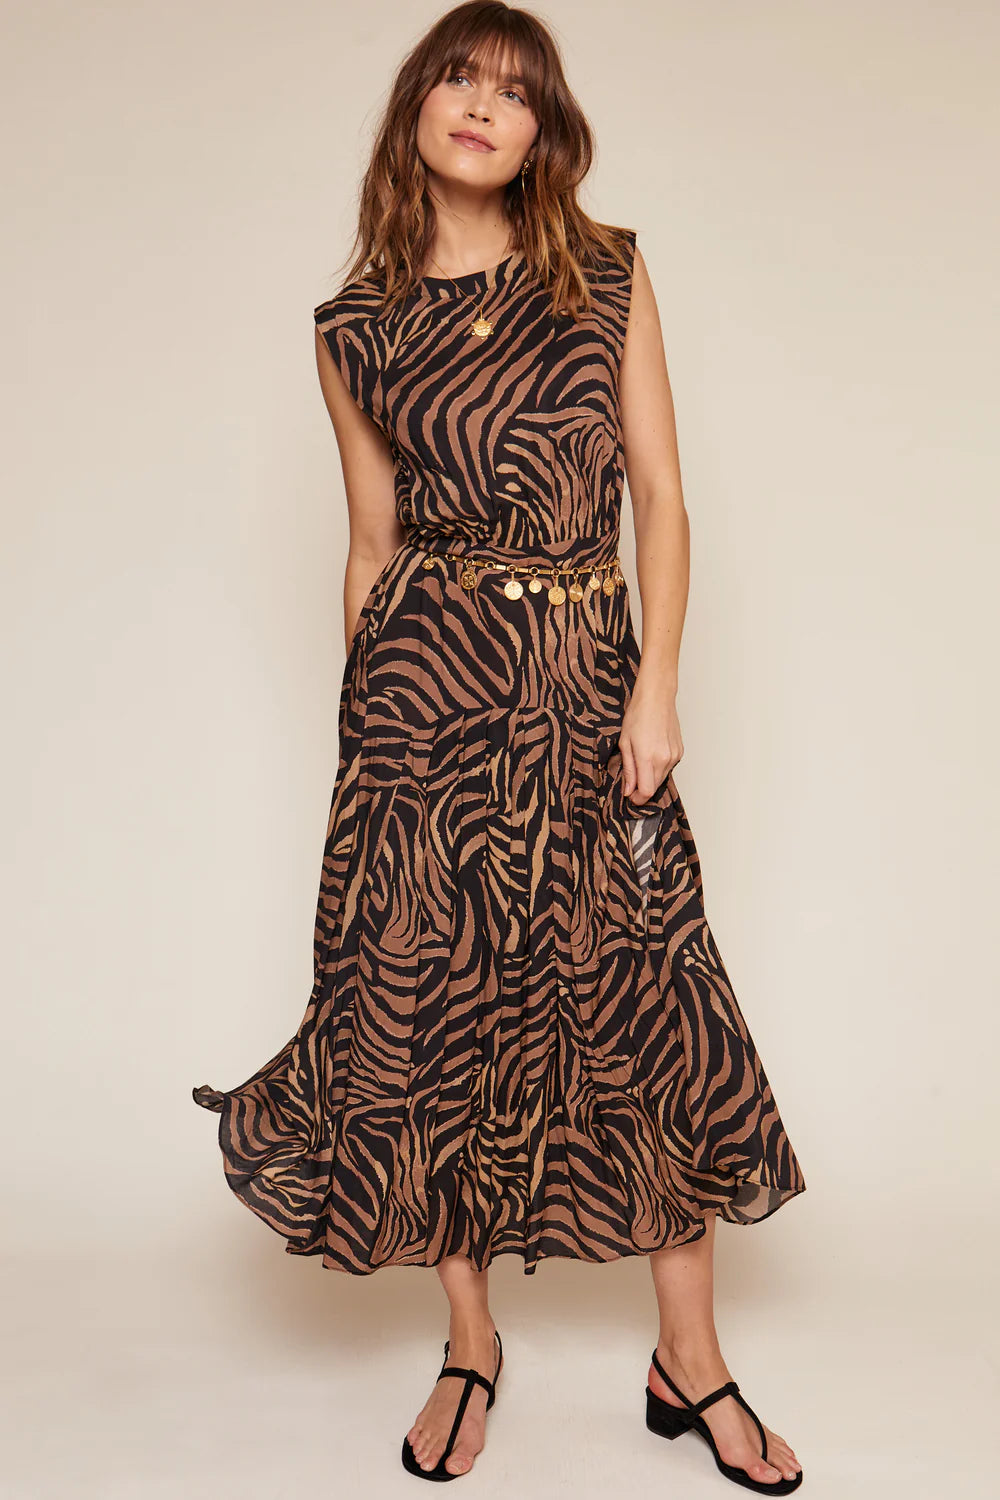 RIXO Coralie Dress in Tiger Patchwork Black